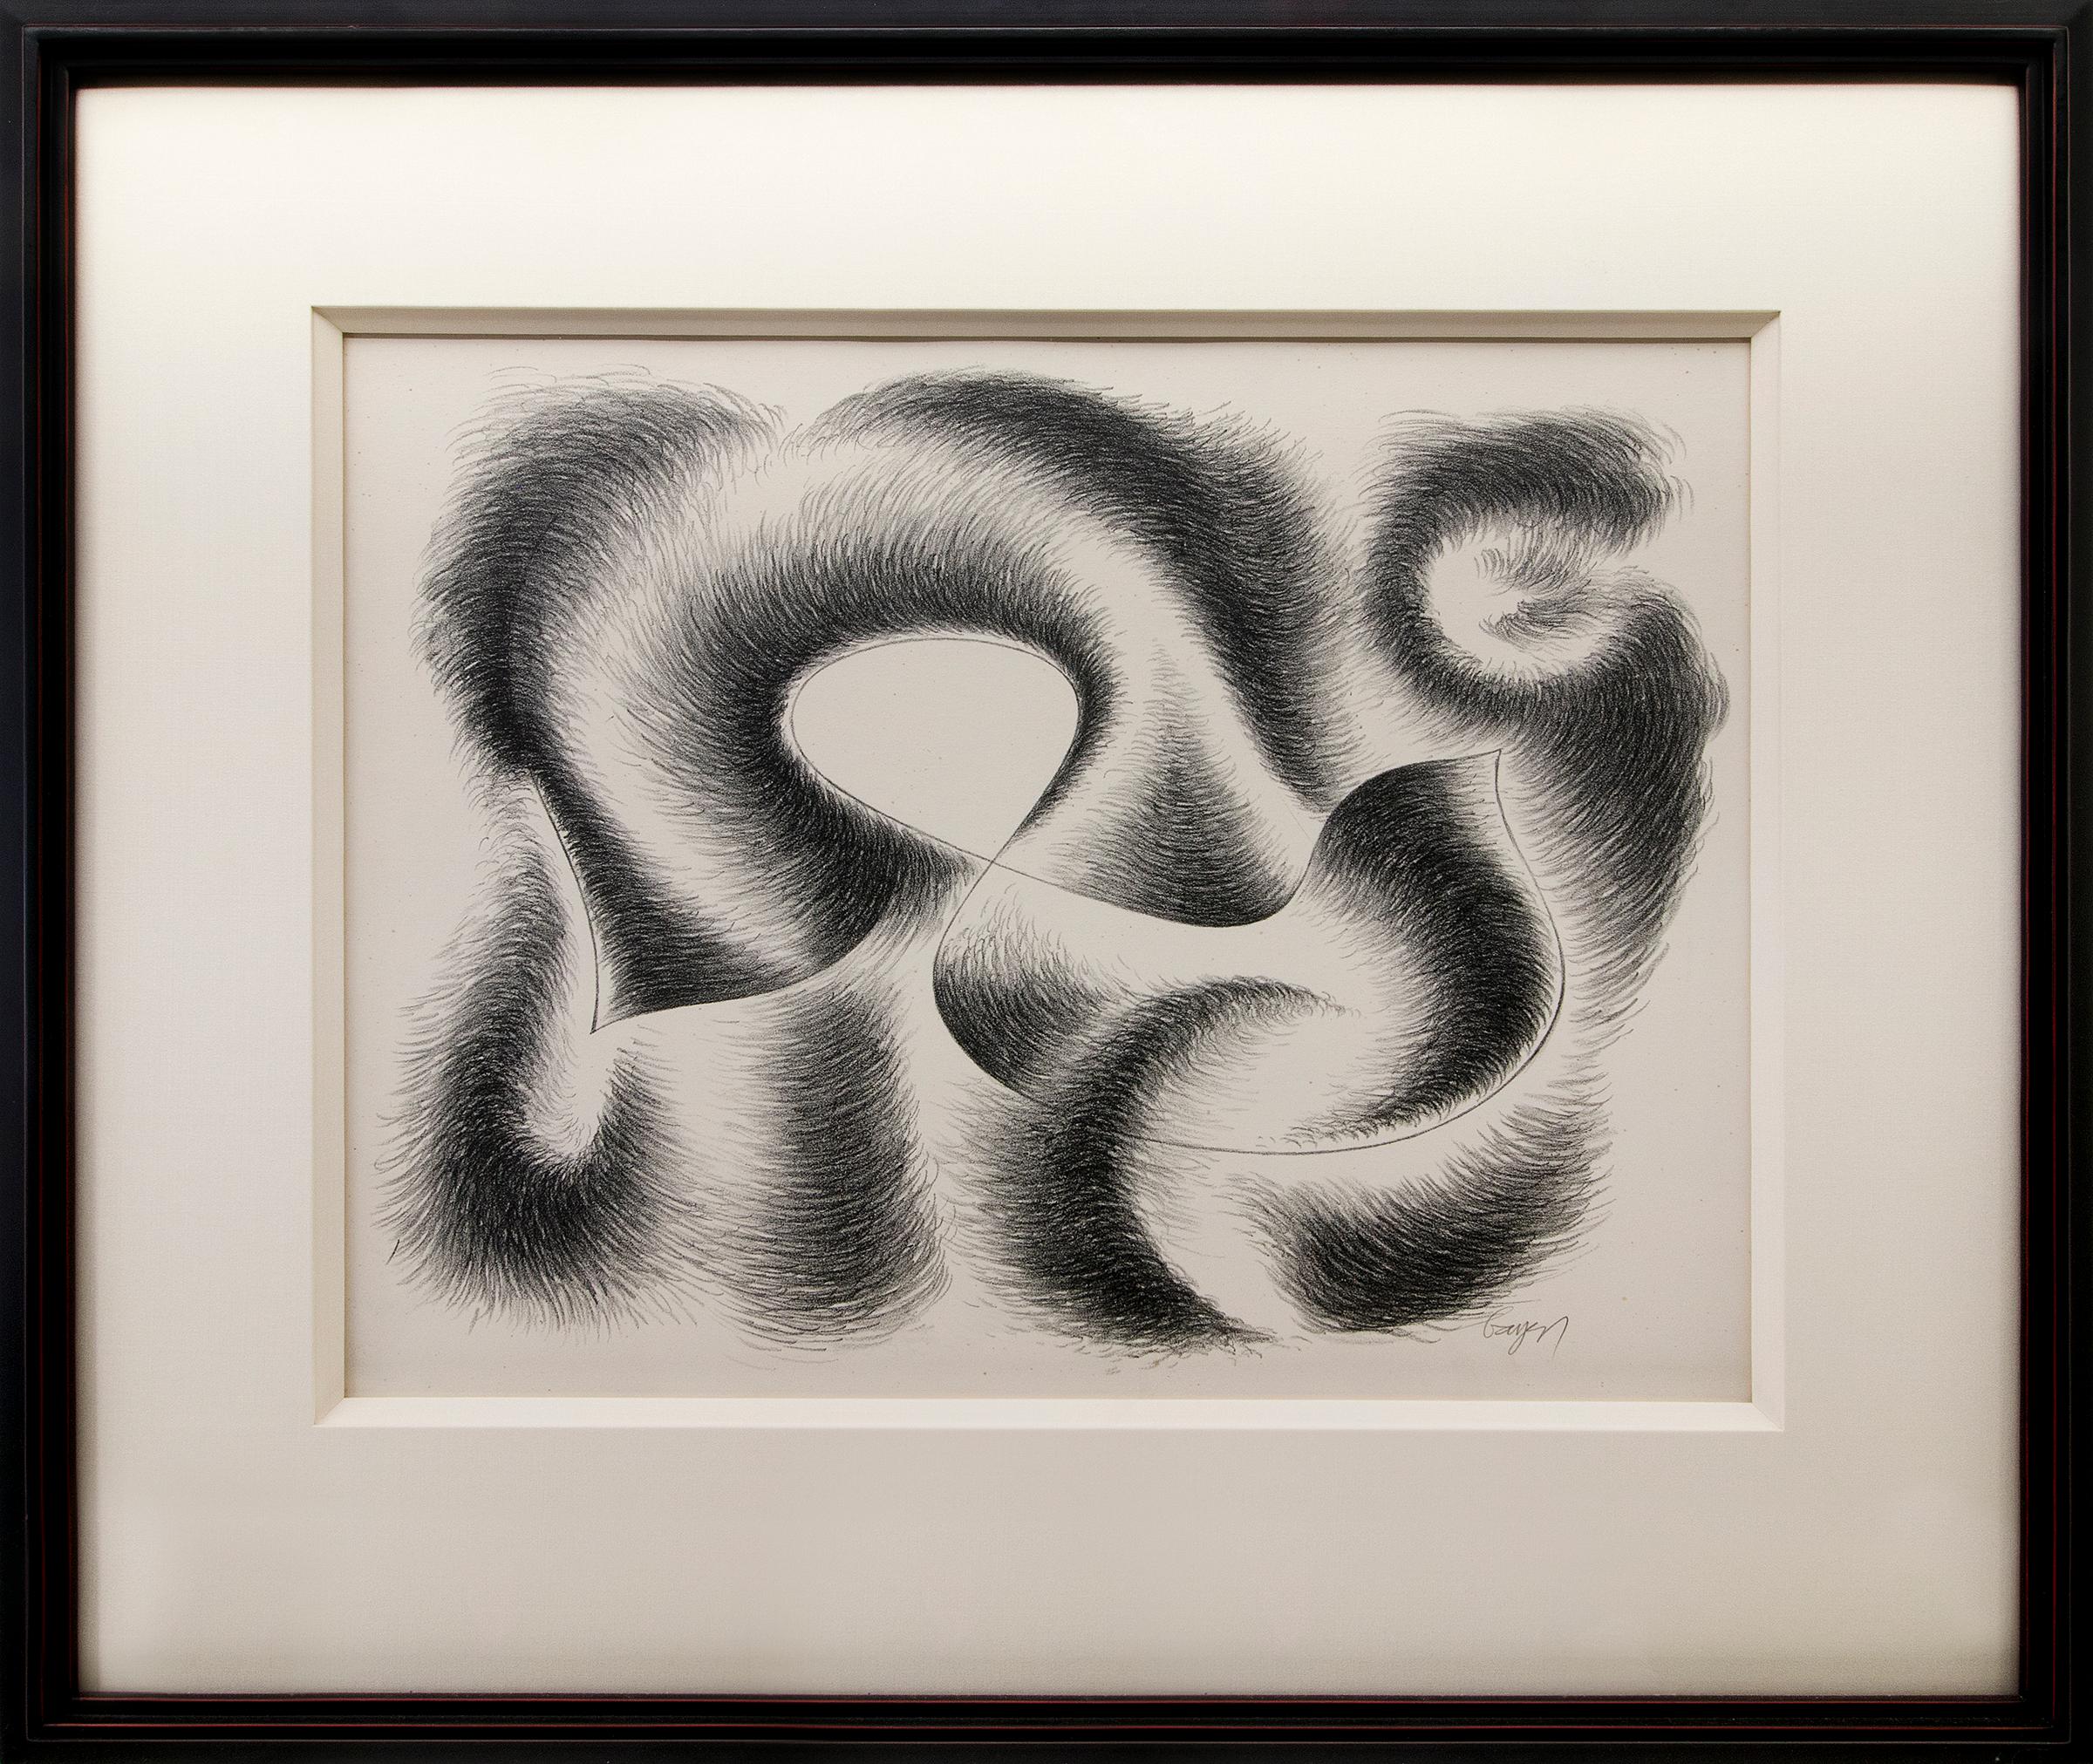 Herbert Bayer Abstract Print - Convolution, 1940s Modern Black White Abstract Lithograph of Kinetic Movement